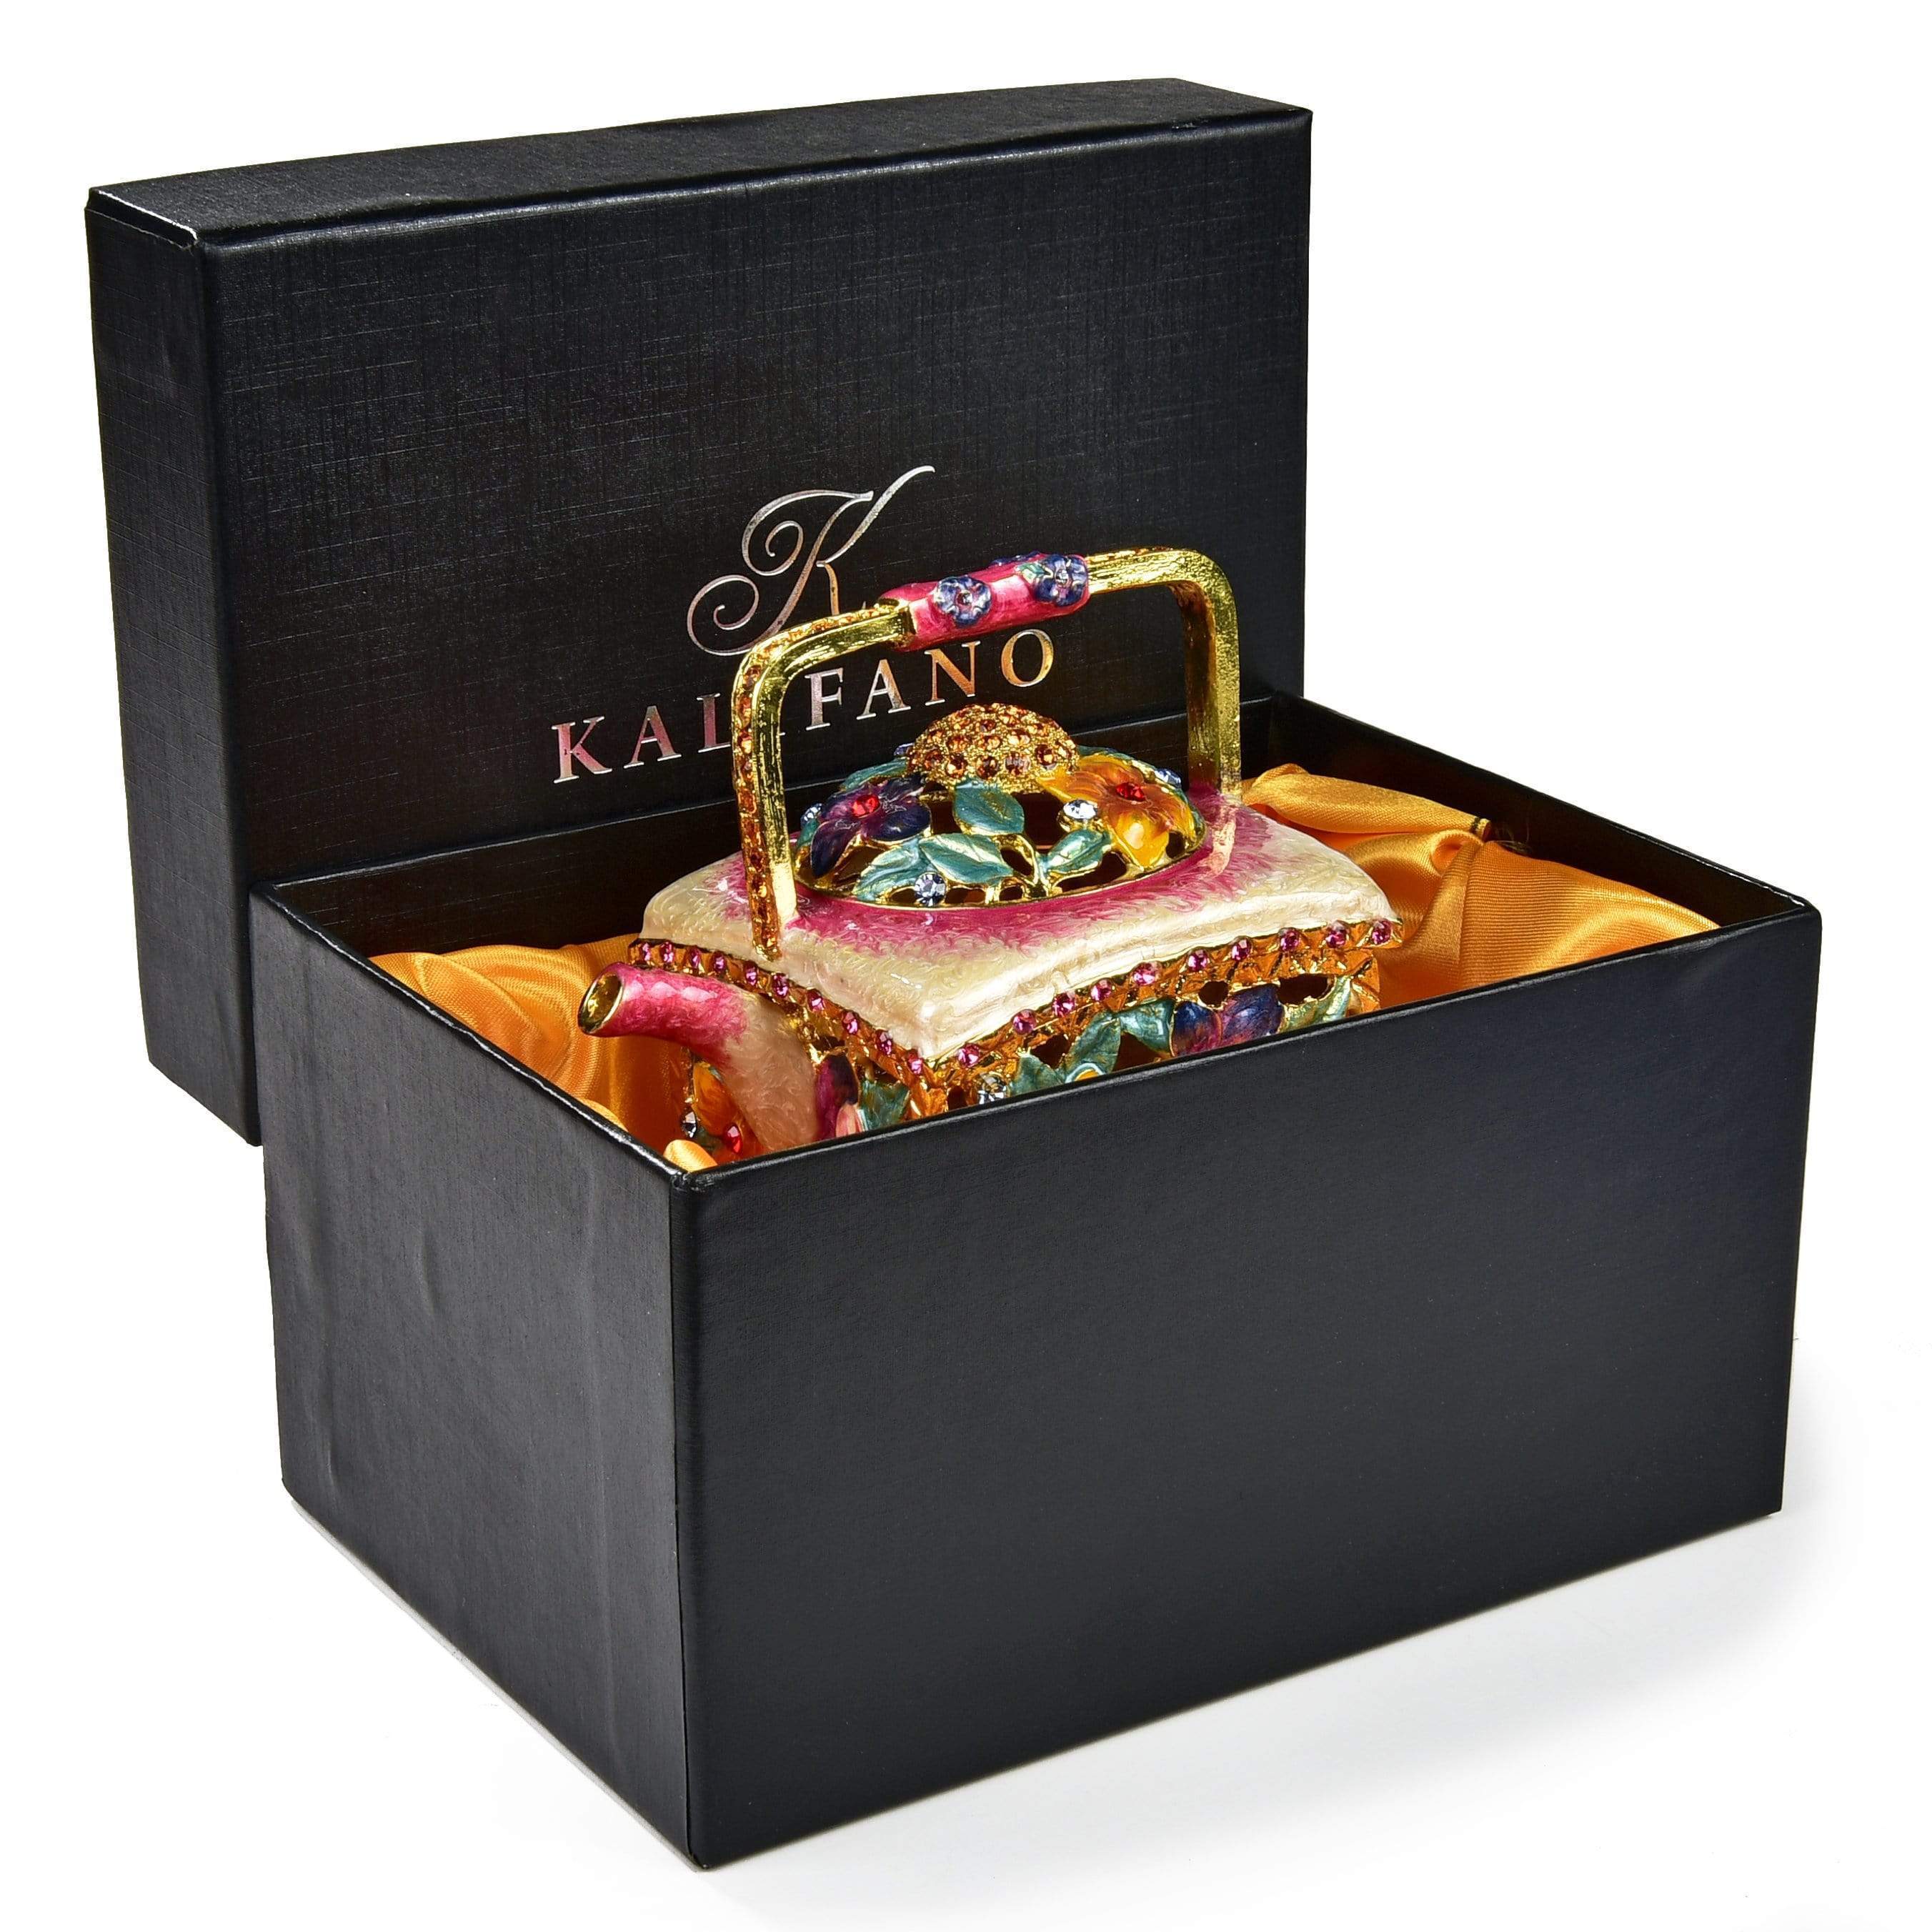 Kalifano Vanity Figurine Teapot Figurine Keepsake Box made with Crystals SVA-064